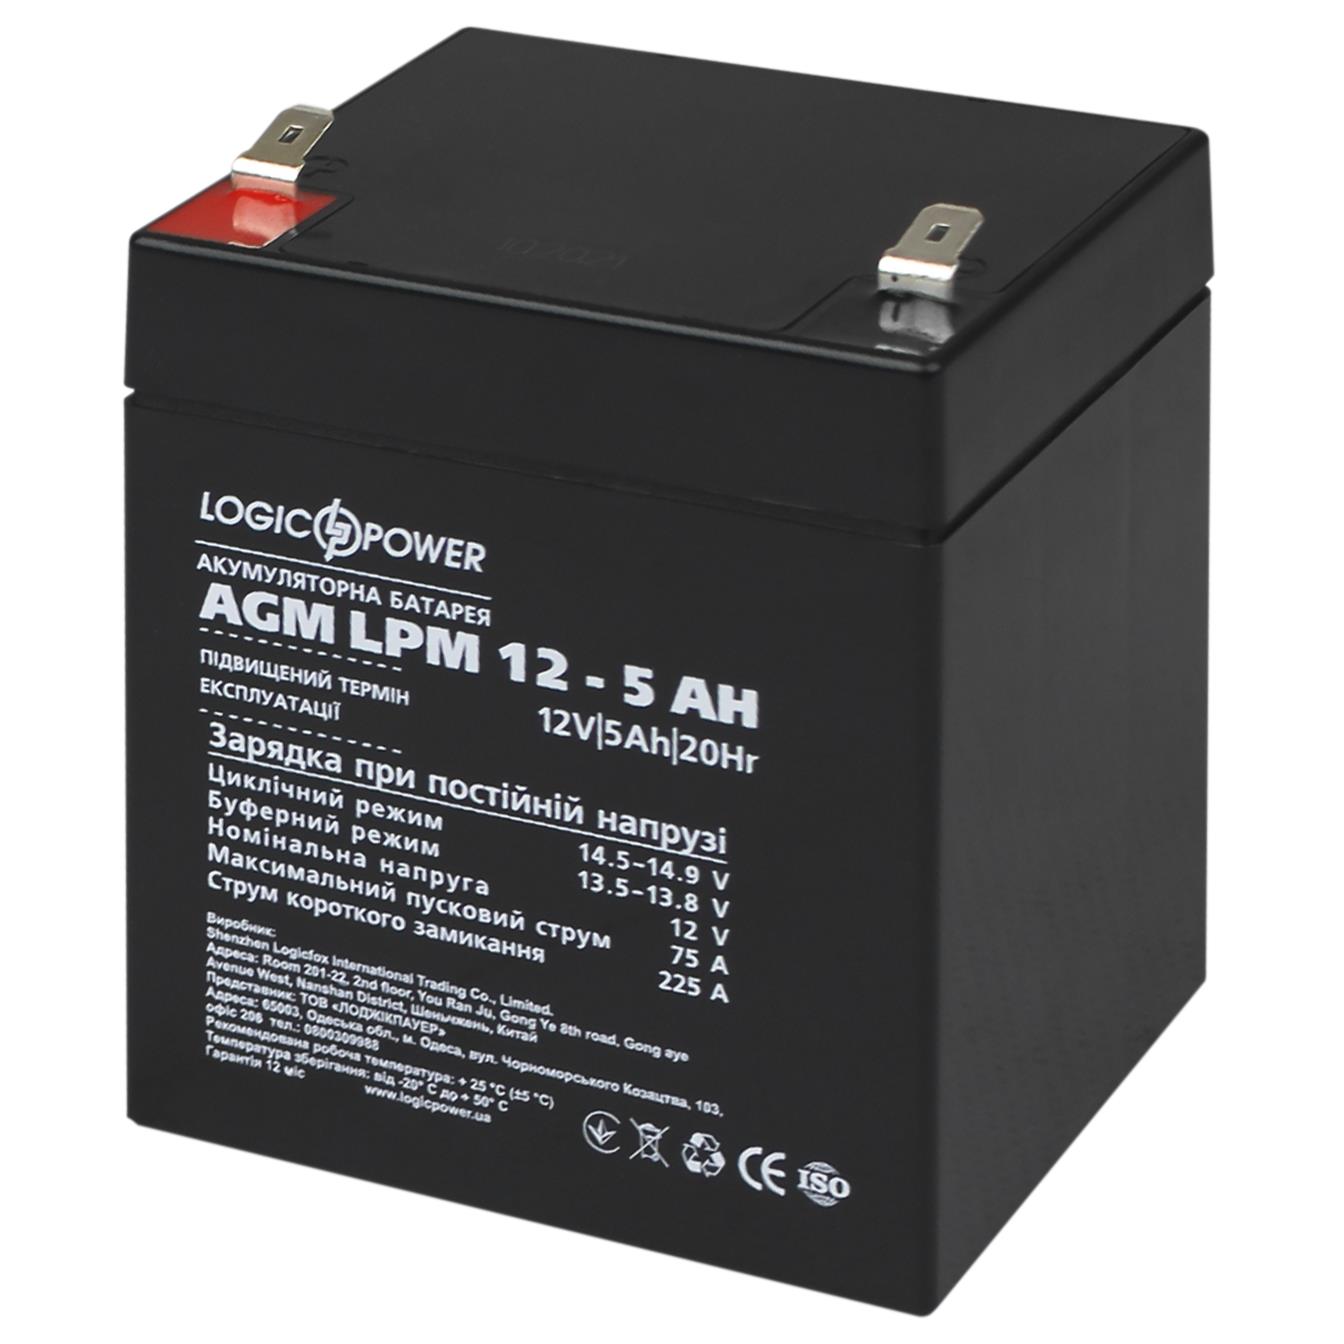 Цена аккумулятор logicpower для ибп LogicPower AGM LPM 12V - 5 Ah (3861) в Киеве